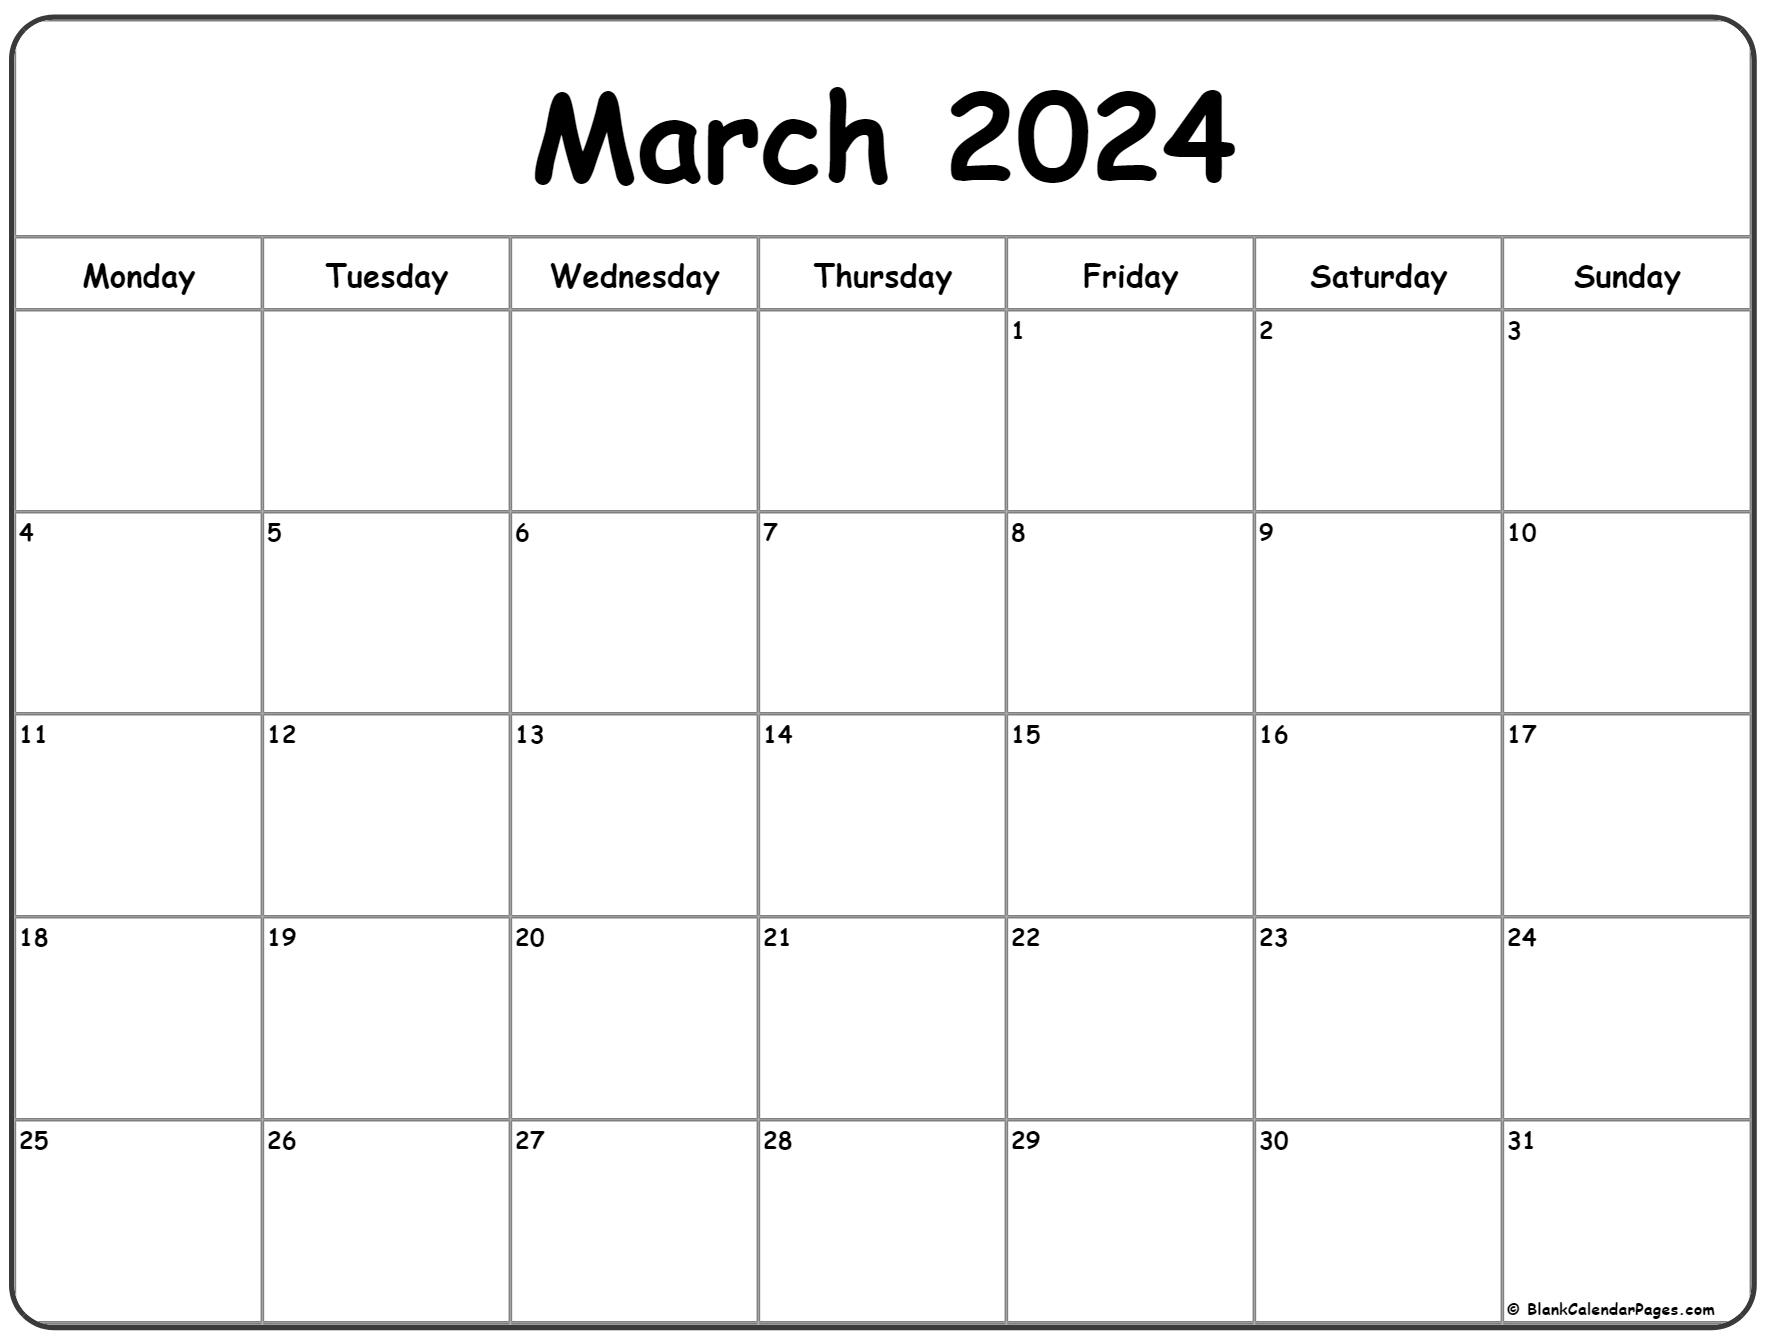 March 2024 Monday Calendar | Monday To Sunday for Printable Blank March 2024 Calendar